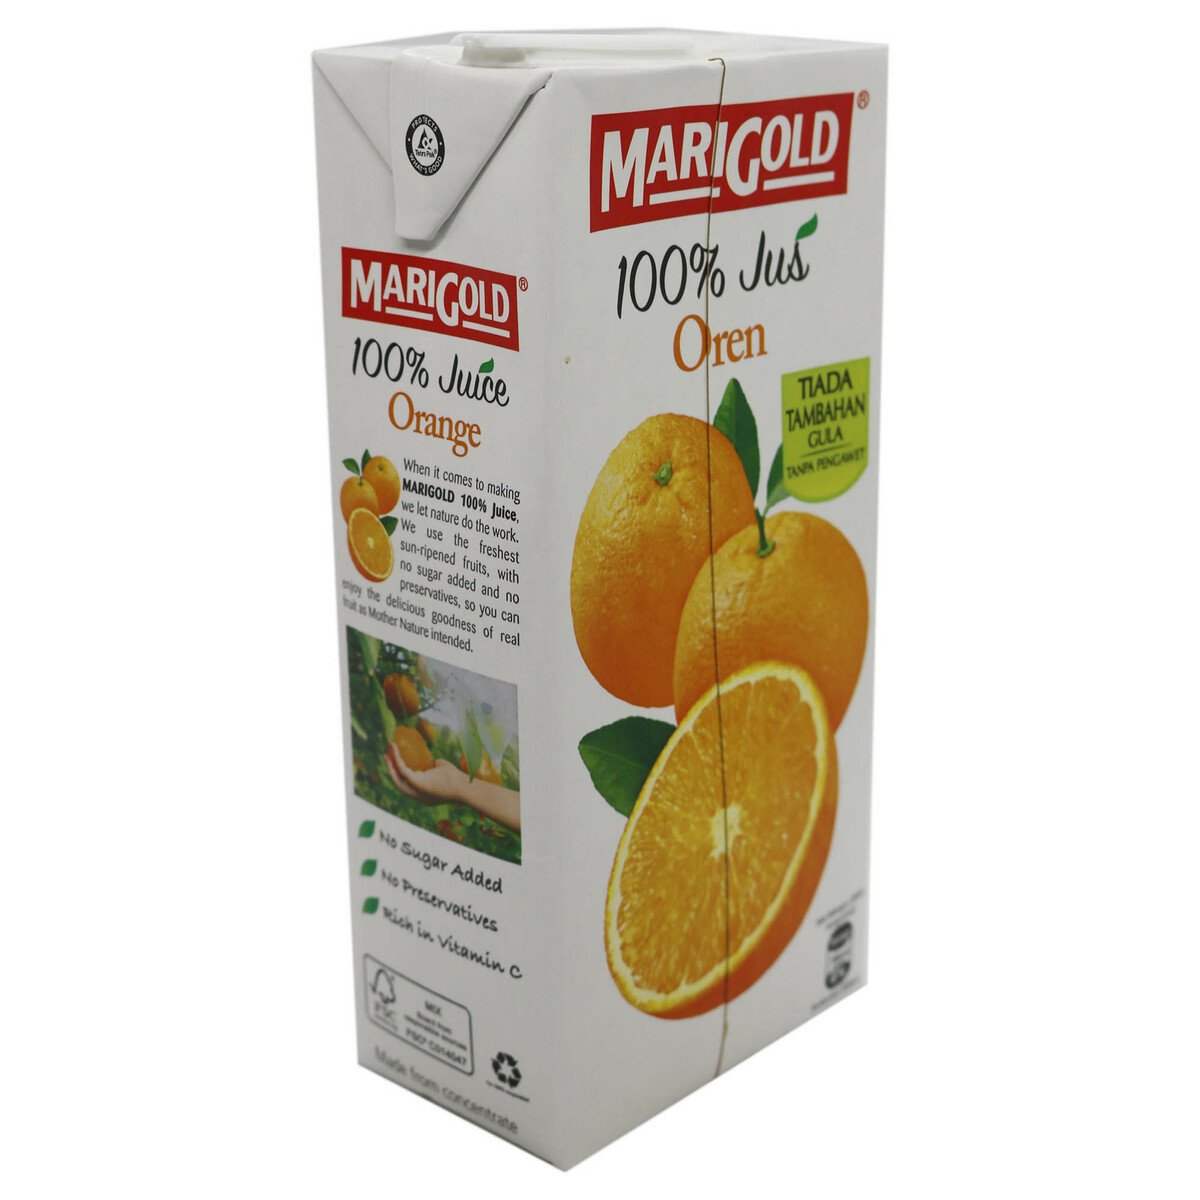 Marigold 100% Orange Juice 1Litre